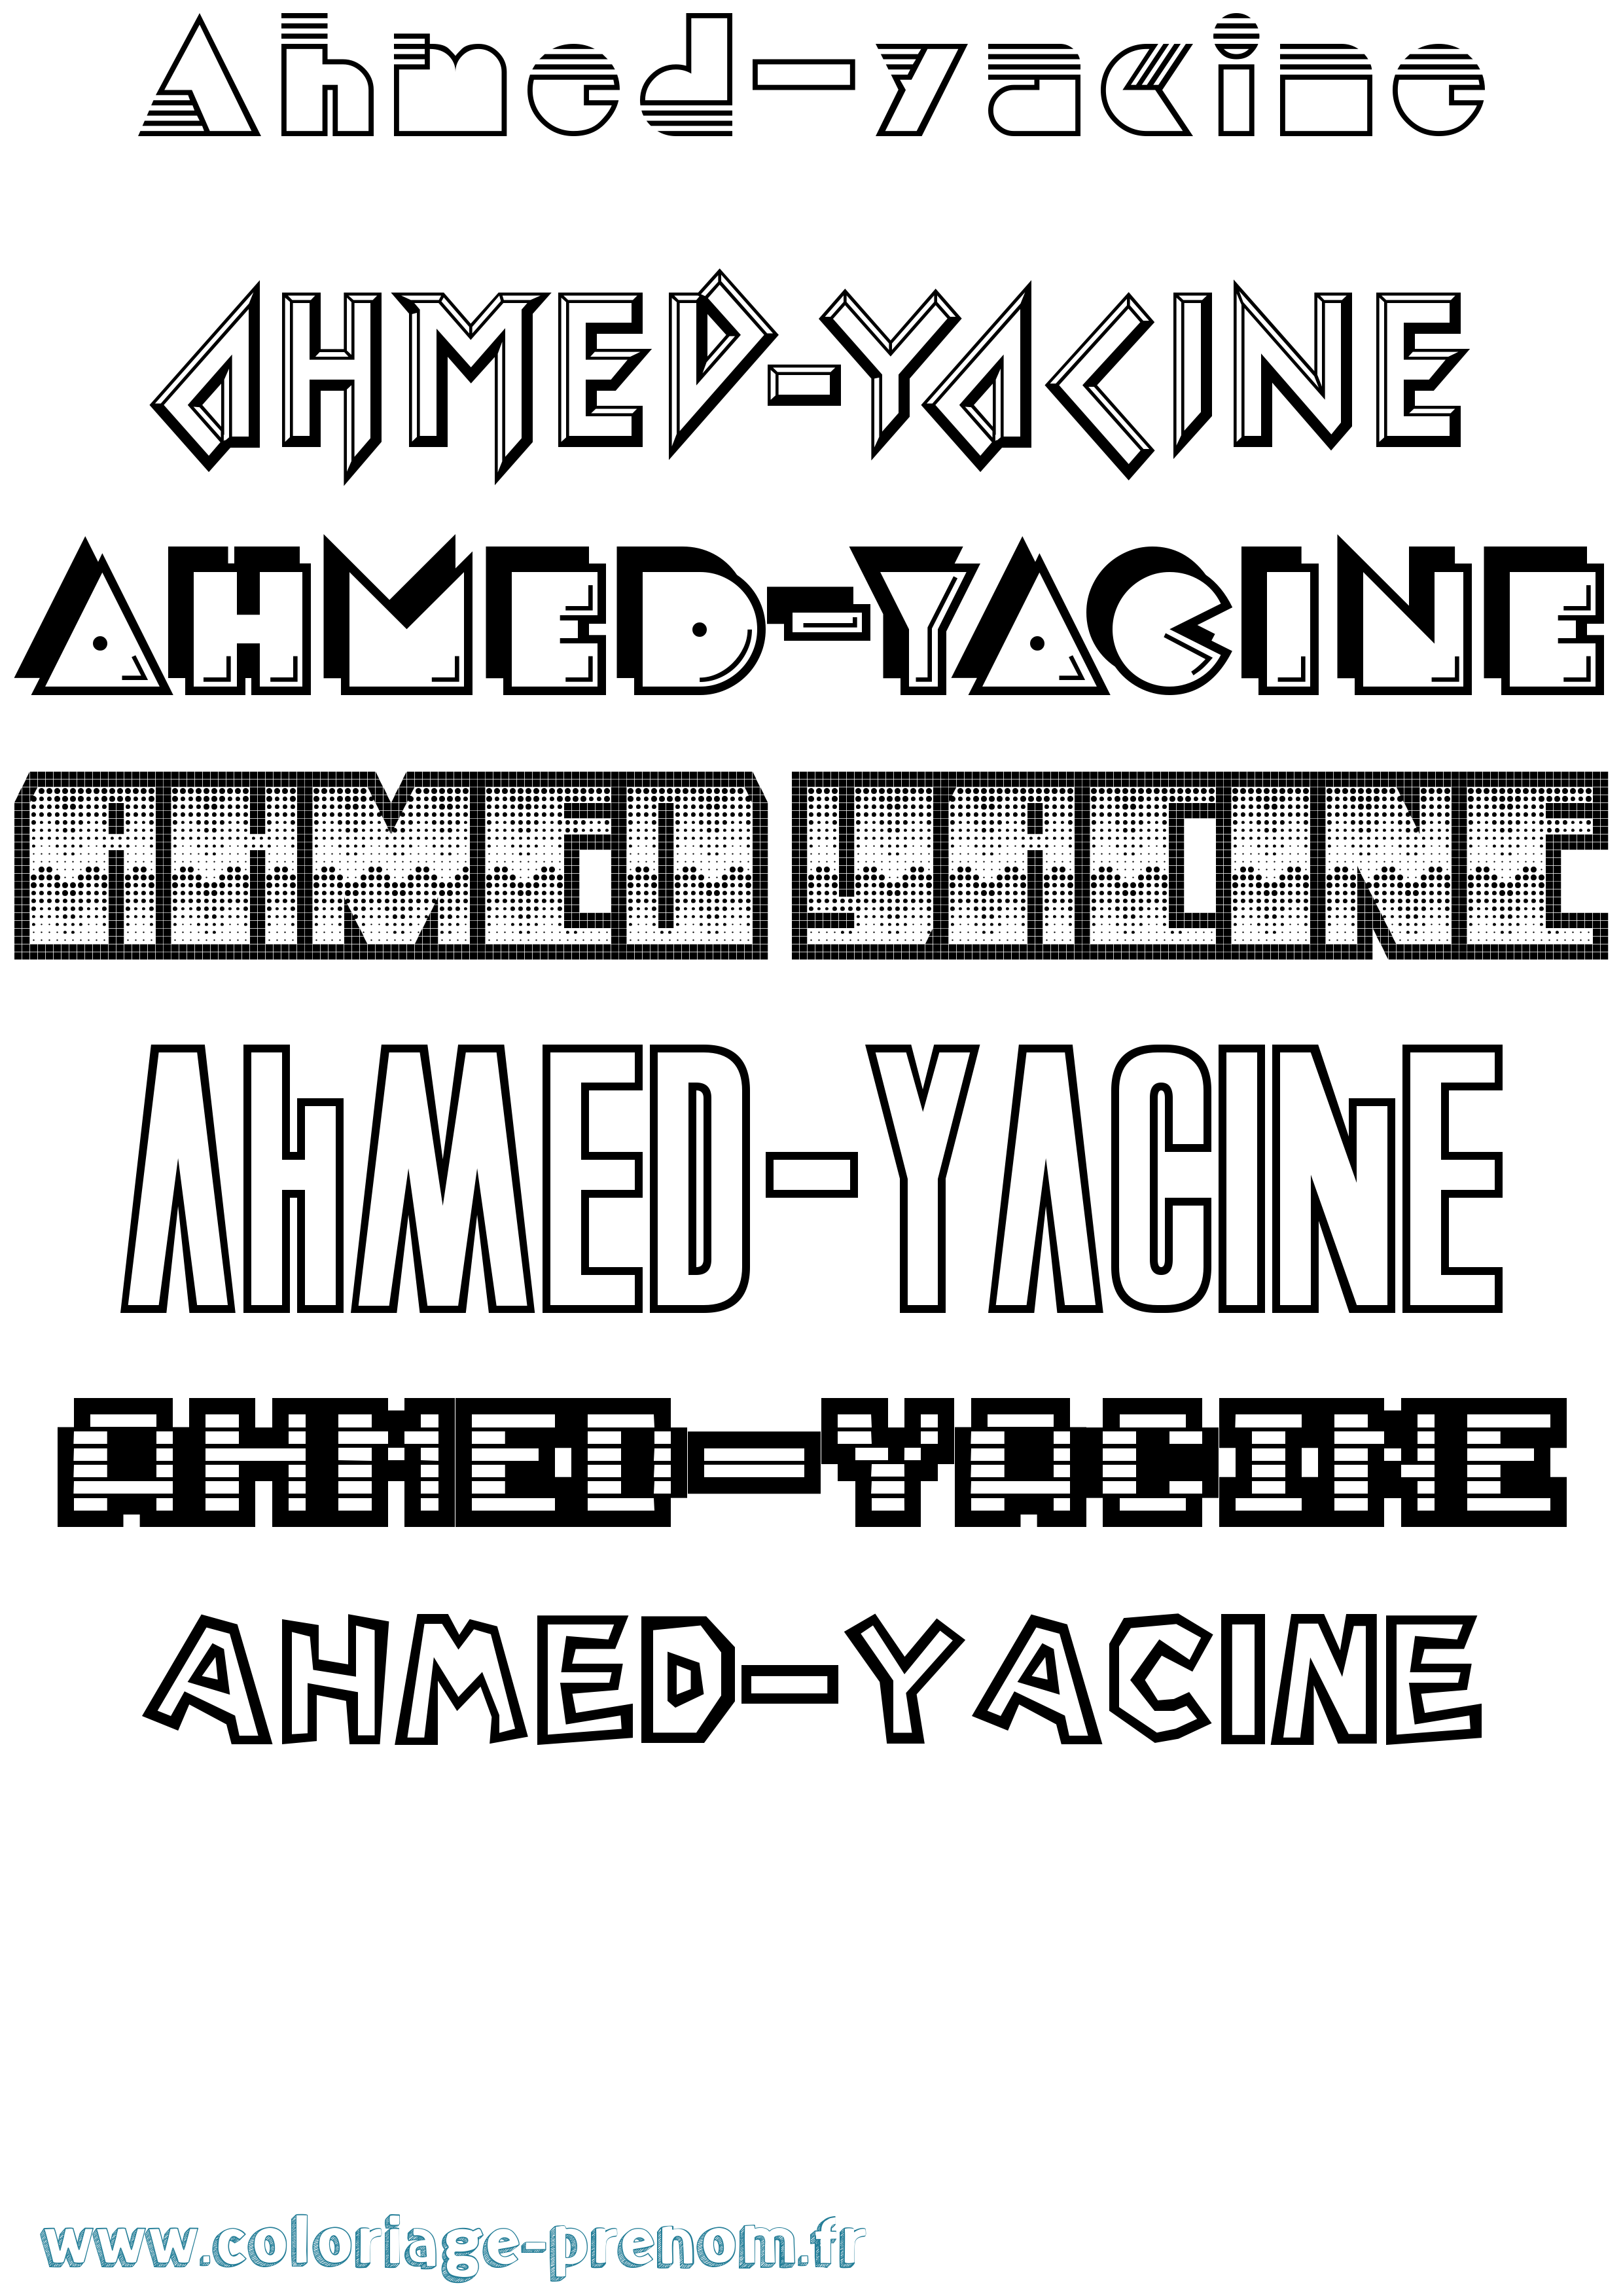 Coloriage prénom Ahmed-Yacine Jeux Vidéos